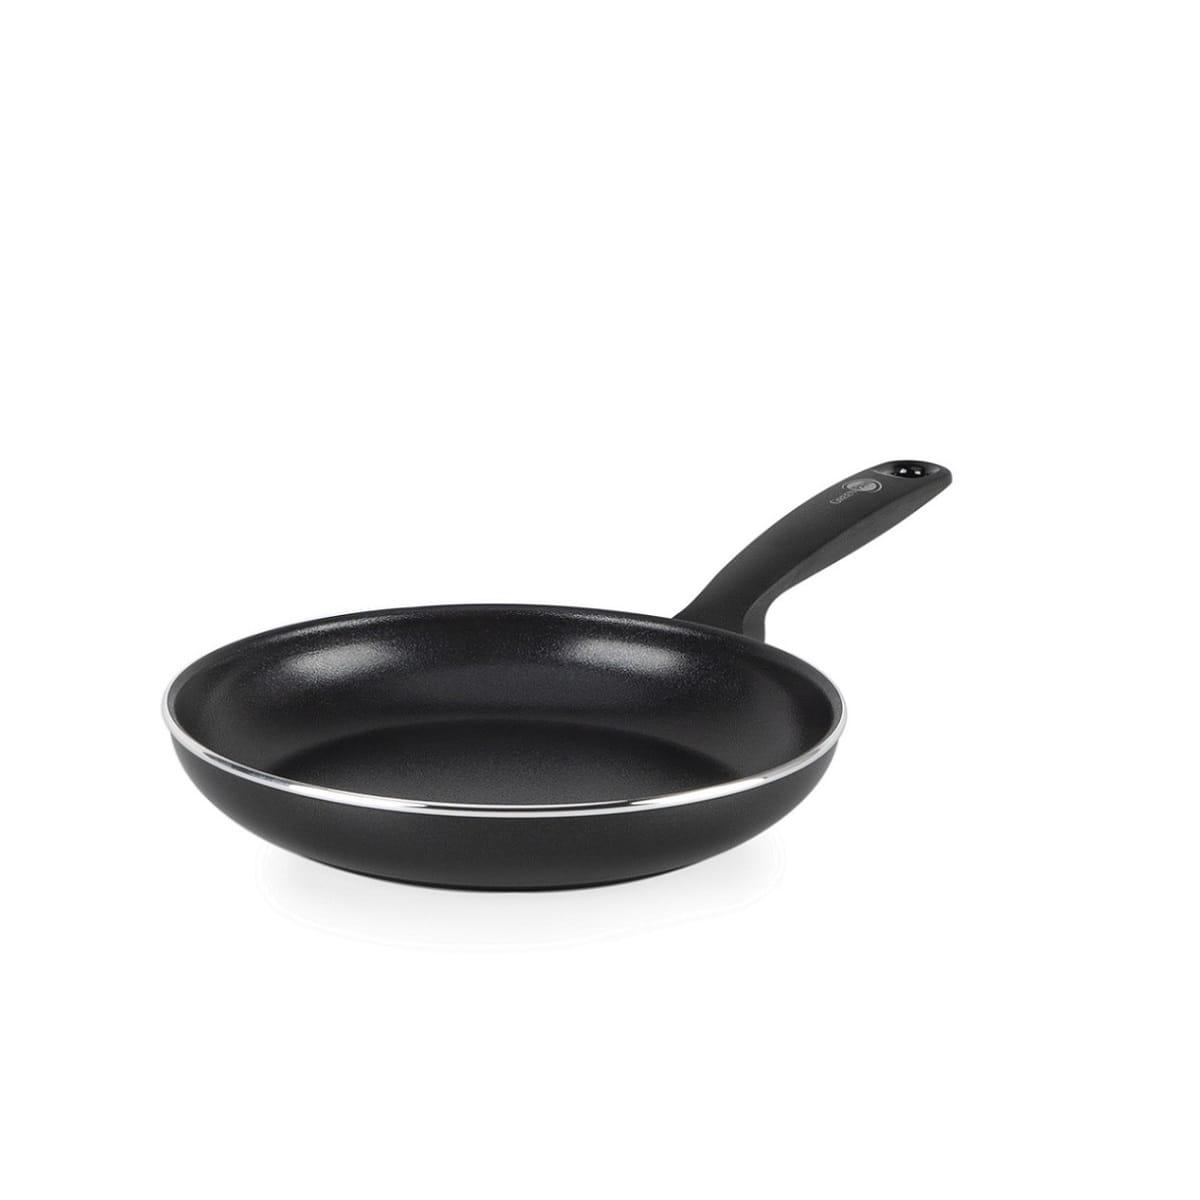 CC001527-001 - Andorra Frying Pan, Black - 28cm - Product Image 1